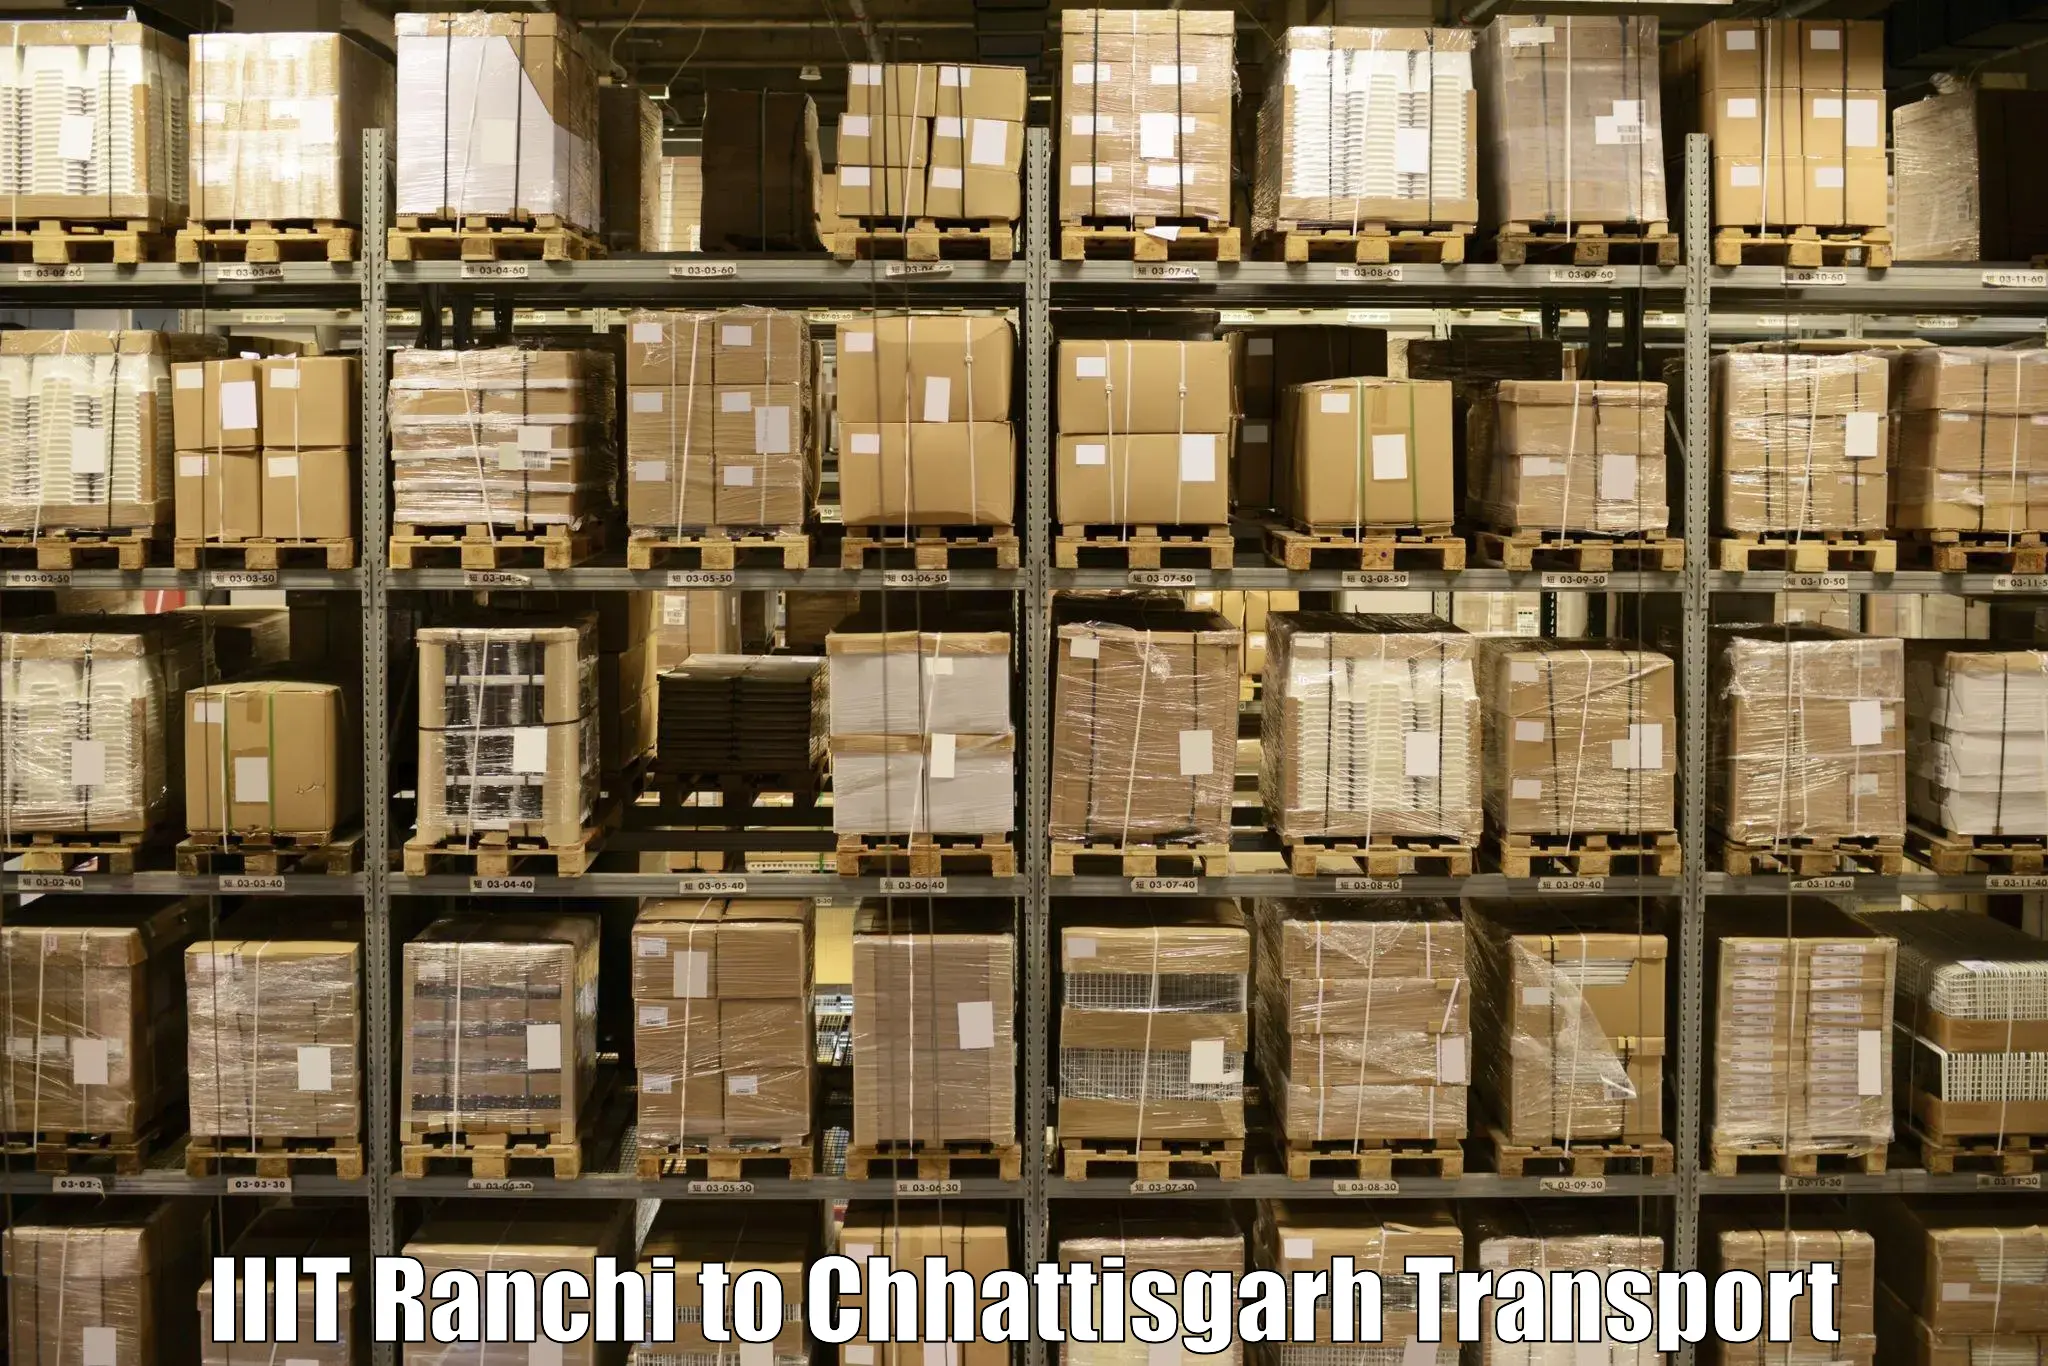 Furniture transport service IIIT Ranchi to Berla